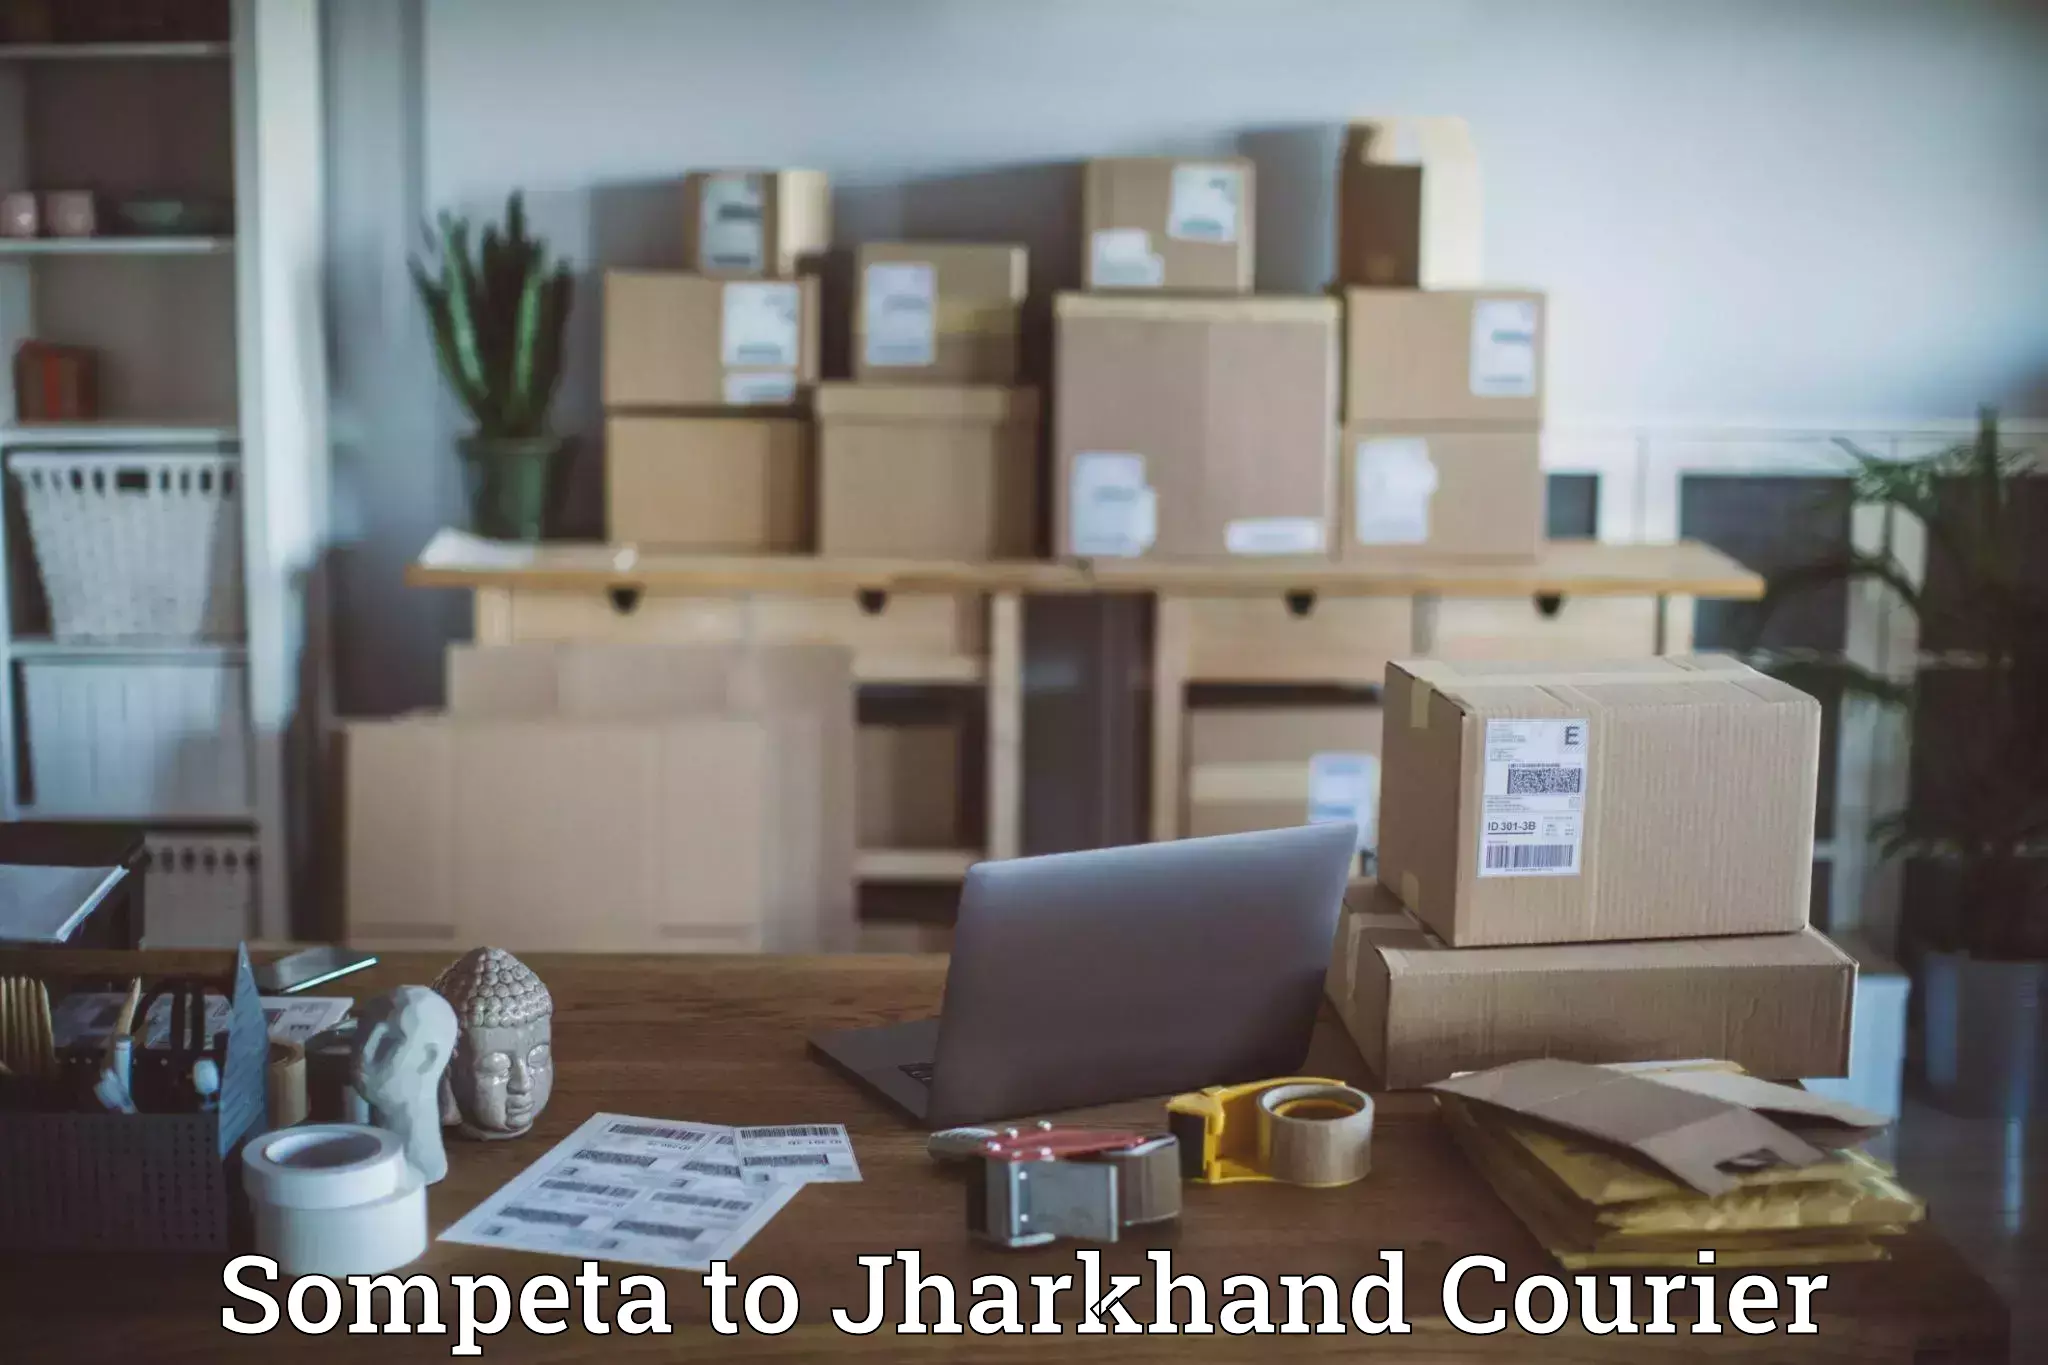 Business delivery service Sompeta to Jamtara